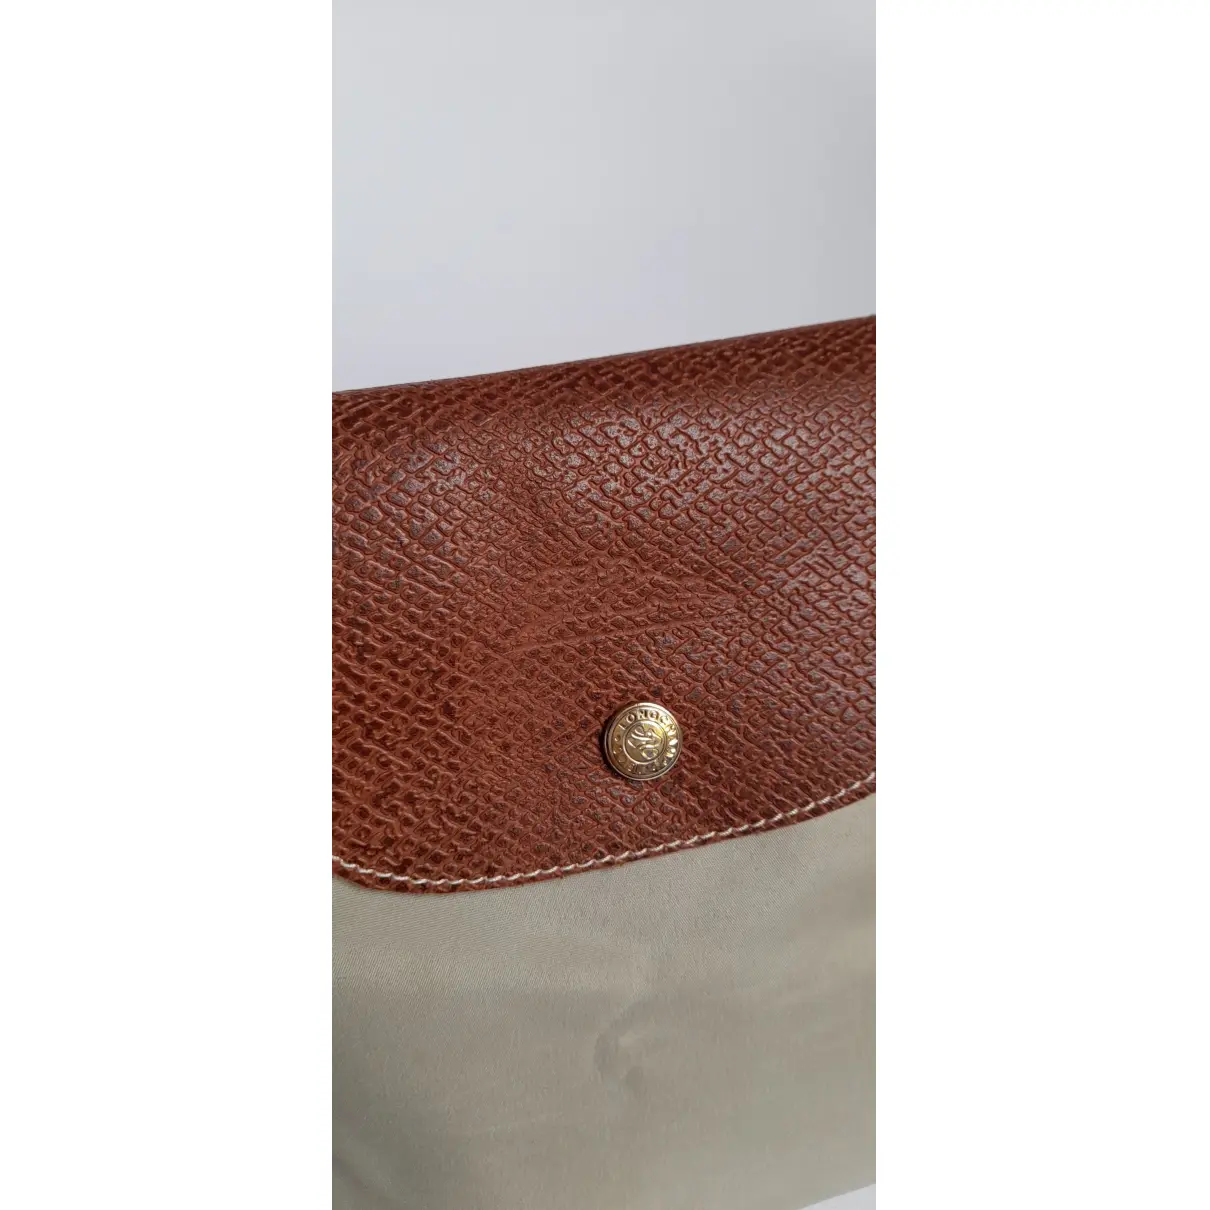 Buy Longchamp Pliage linen handbag online